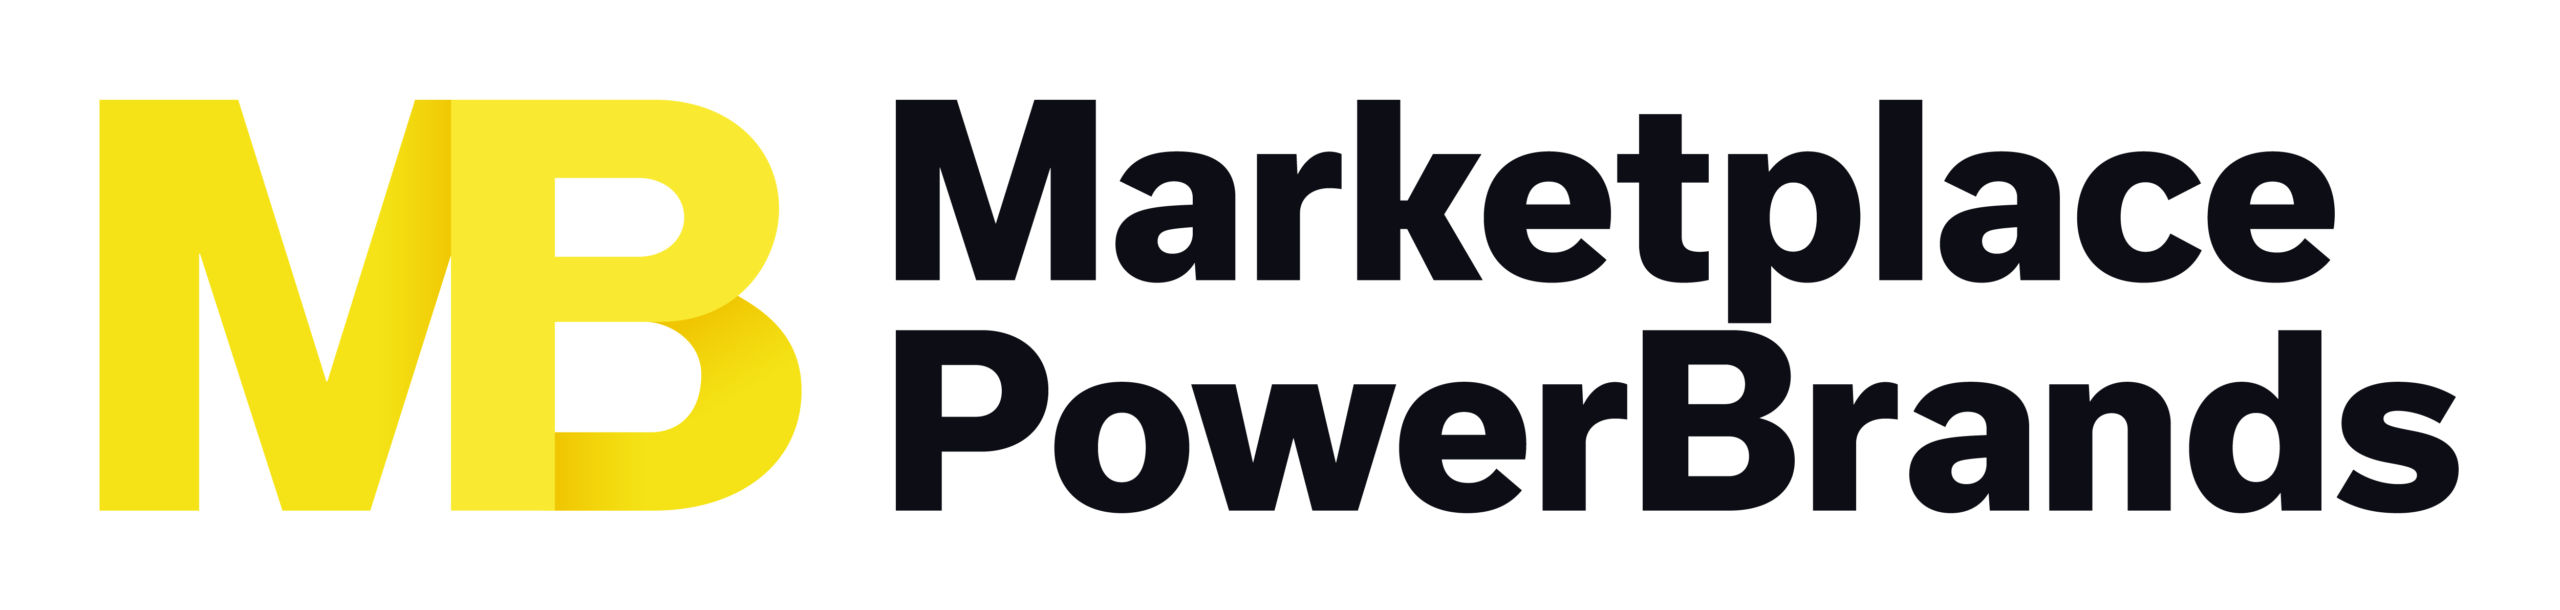 Marketplace PowerBrands